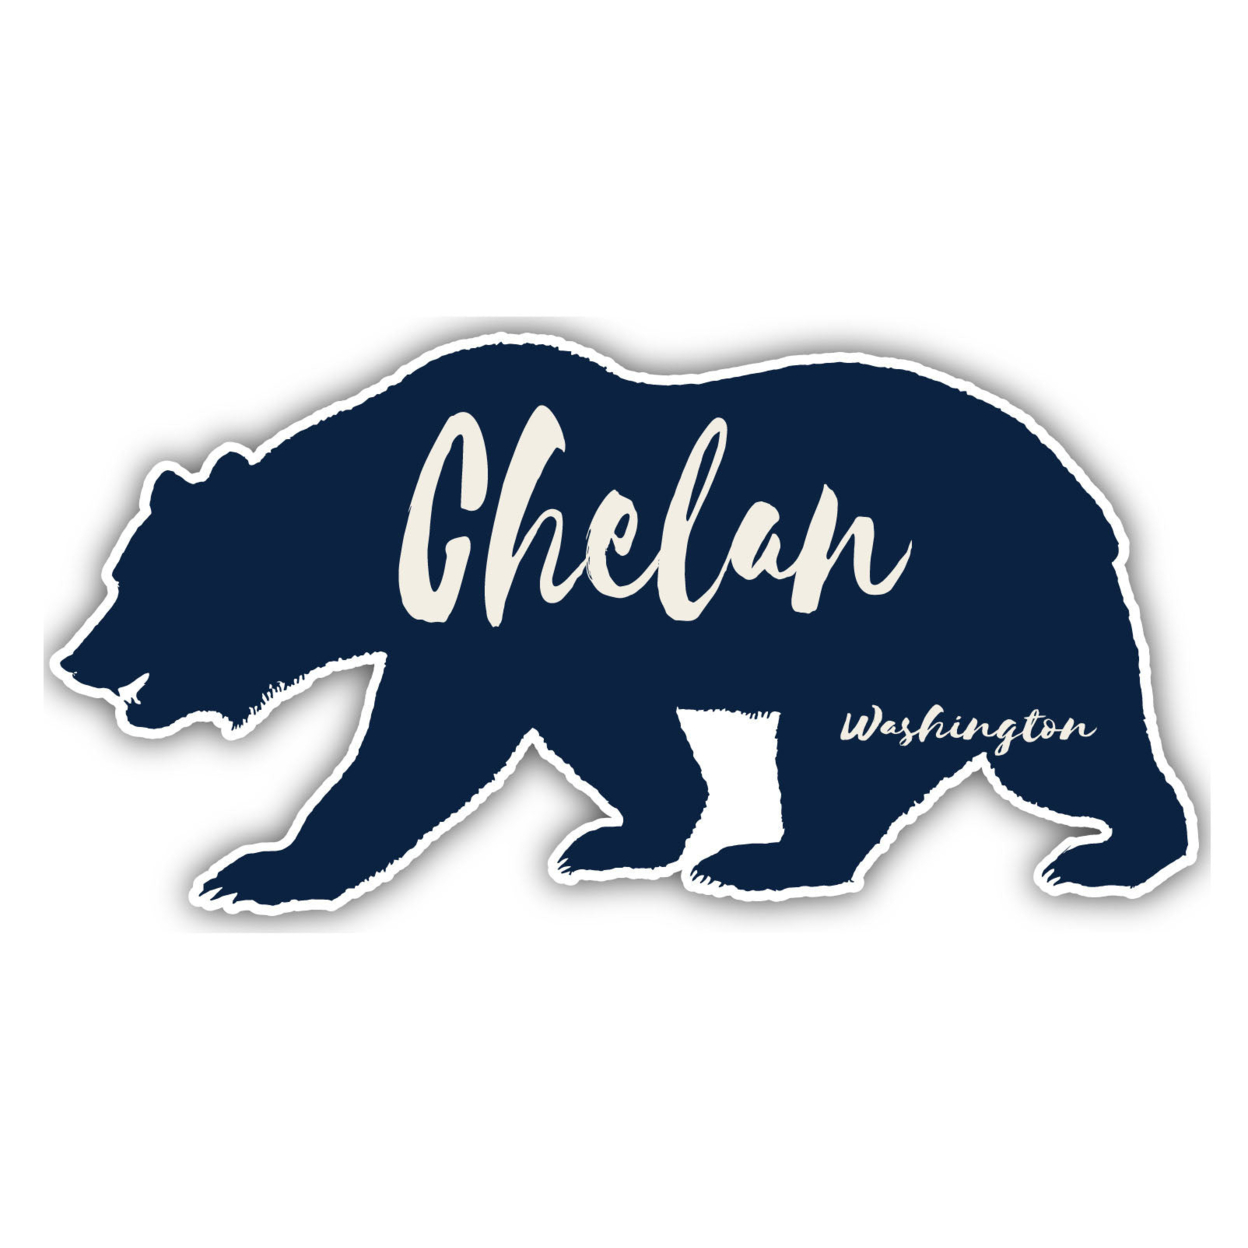 Chelan Washington Souvenir Decorative Stickers (Choose Theme And Size) - 4-Pack, 2-Inch, Bear